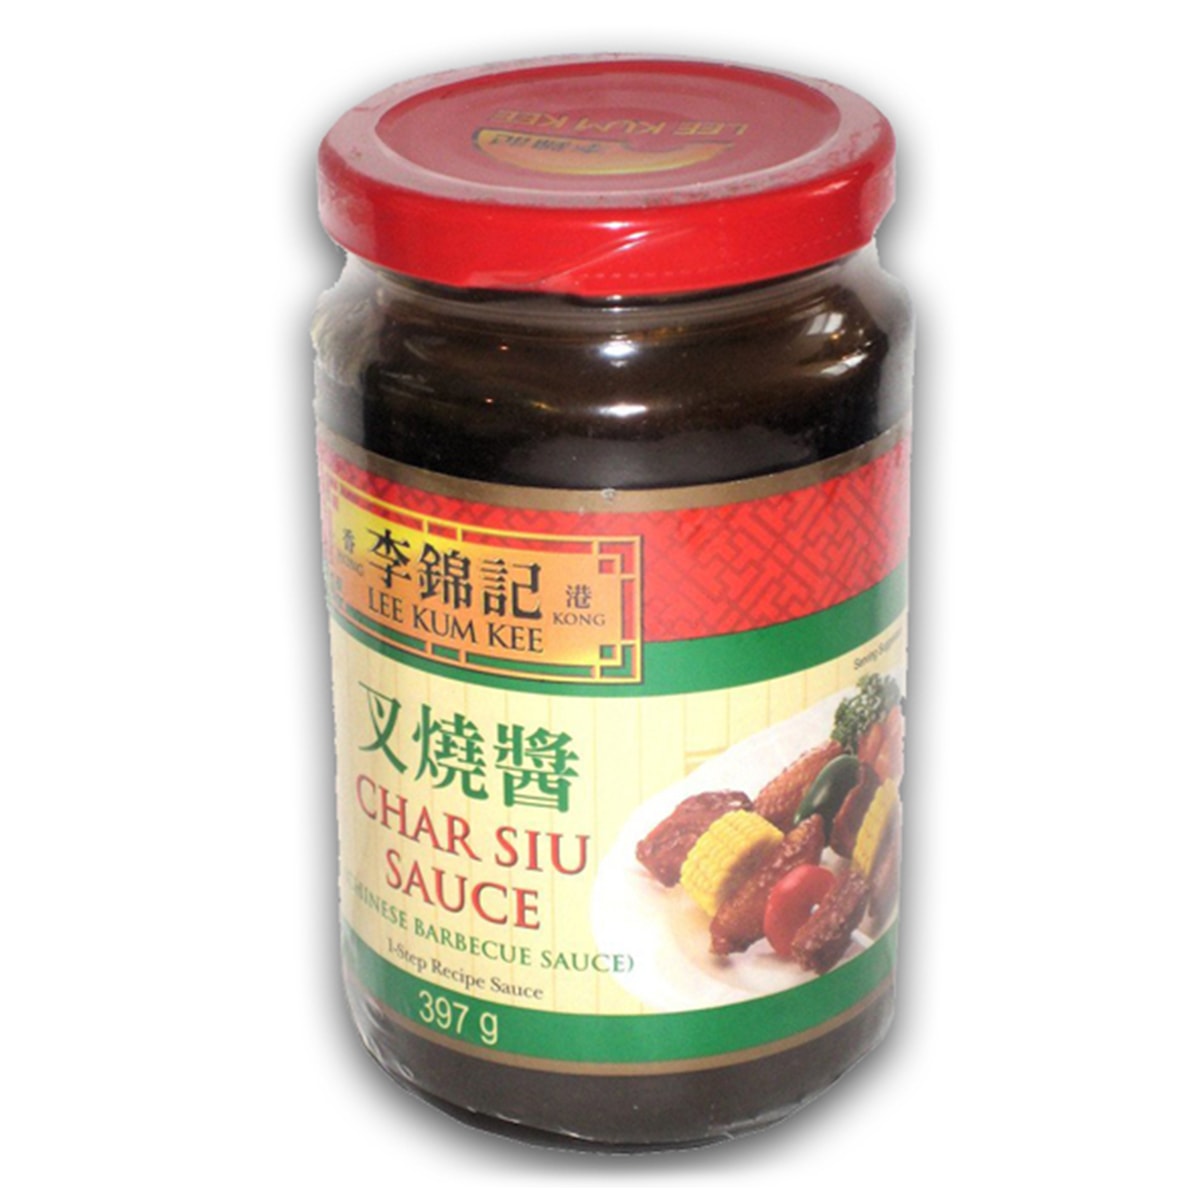 Char Siu Sauce (Chinese Barbecue Sauce) - 397 gm